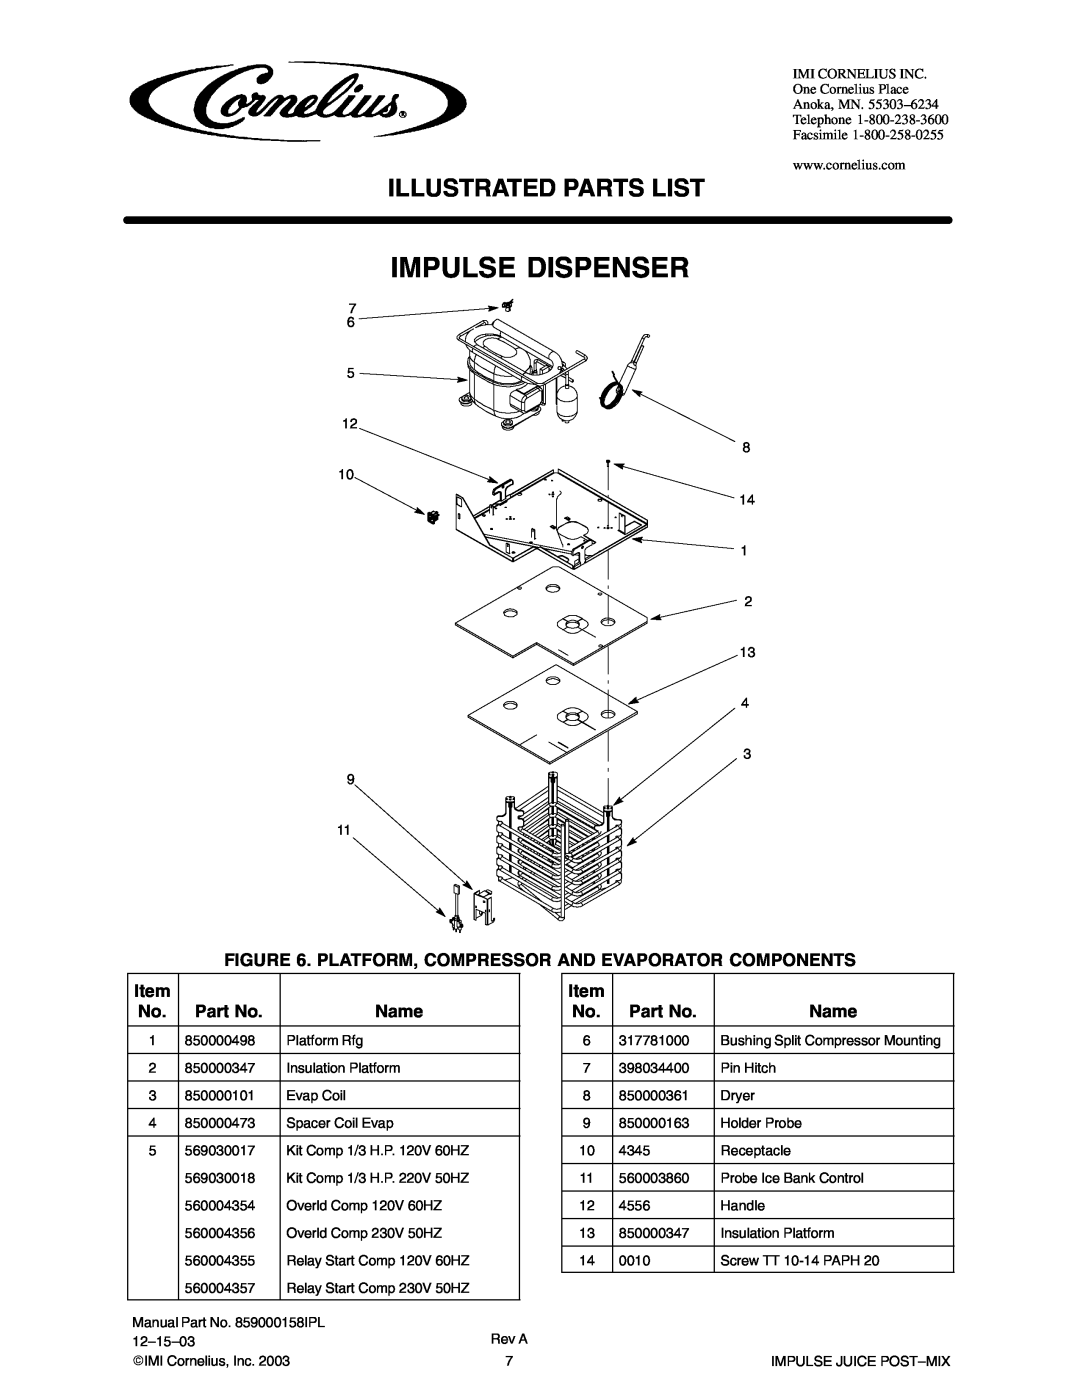 Panasonic 851000109, 851000110, 851000319, 851000320, 851000321 manual Impulse Dispenser, Illustrated Parts List, Name 